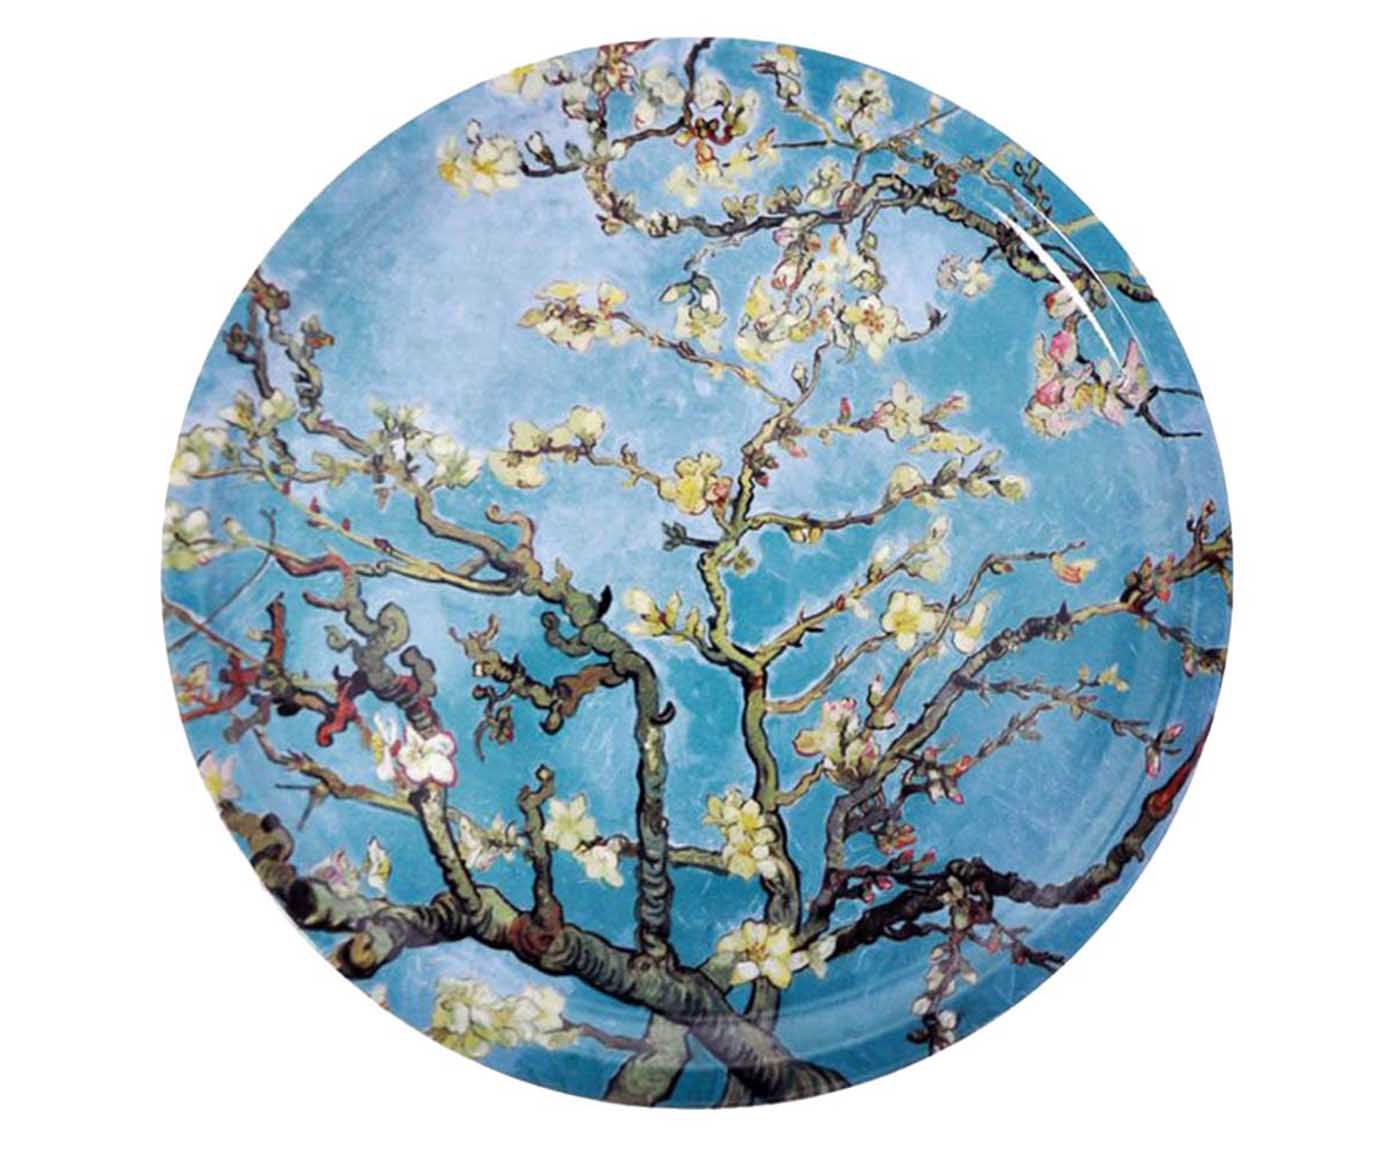 Prato almond blossom van gogh - 31cm | Westwing.com.br